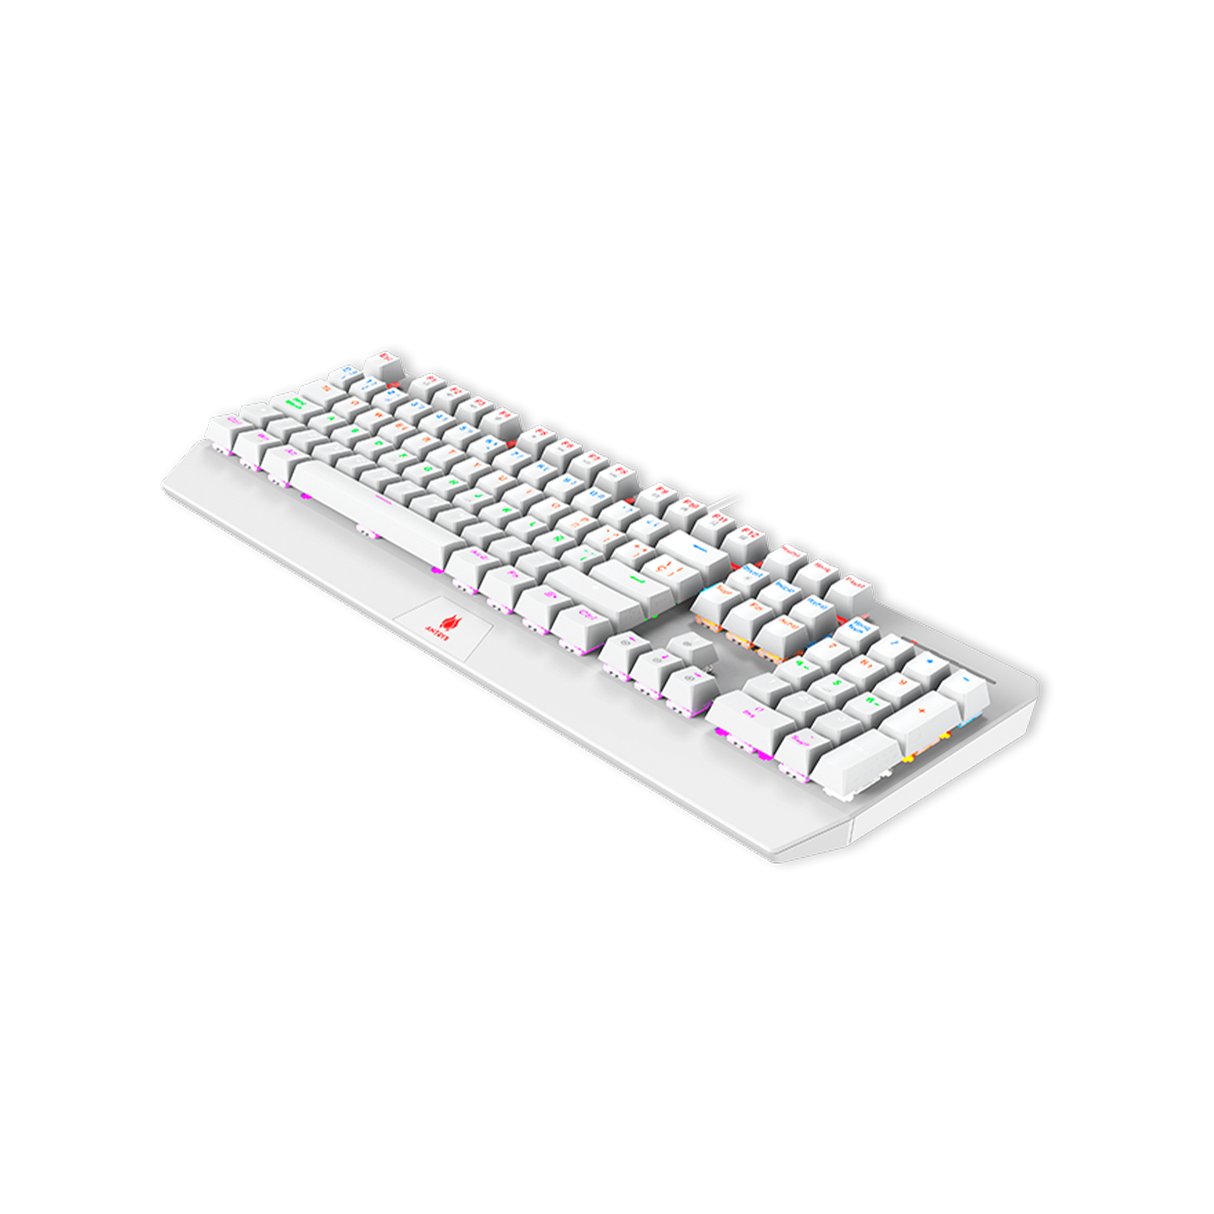 Kit Gaming Teclado Mecanico + Mouse Antryx GC-5100 White Red Switch